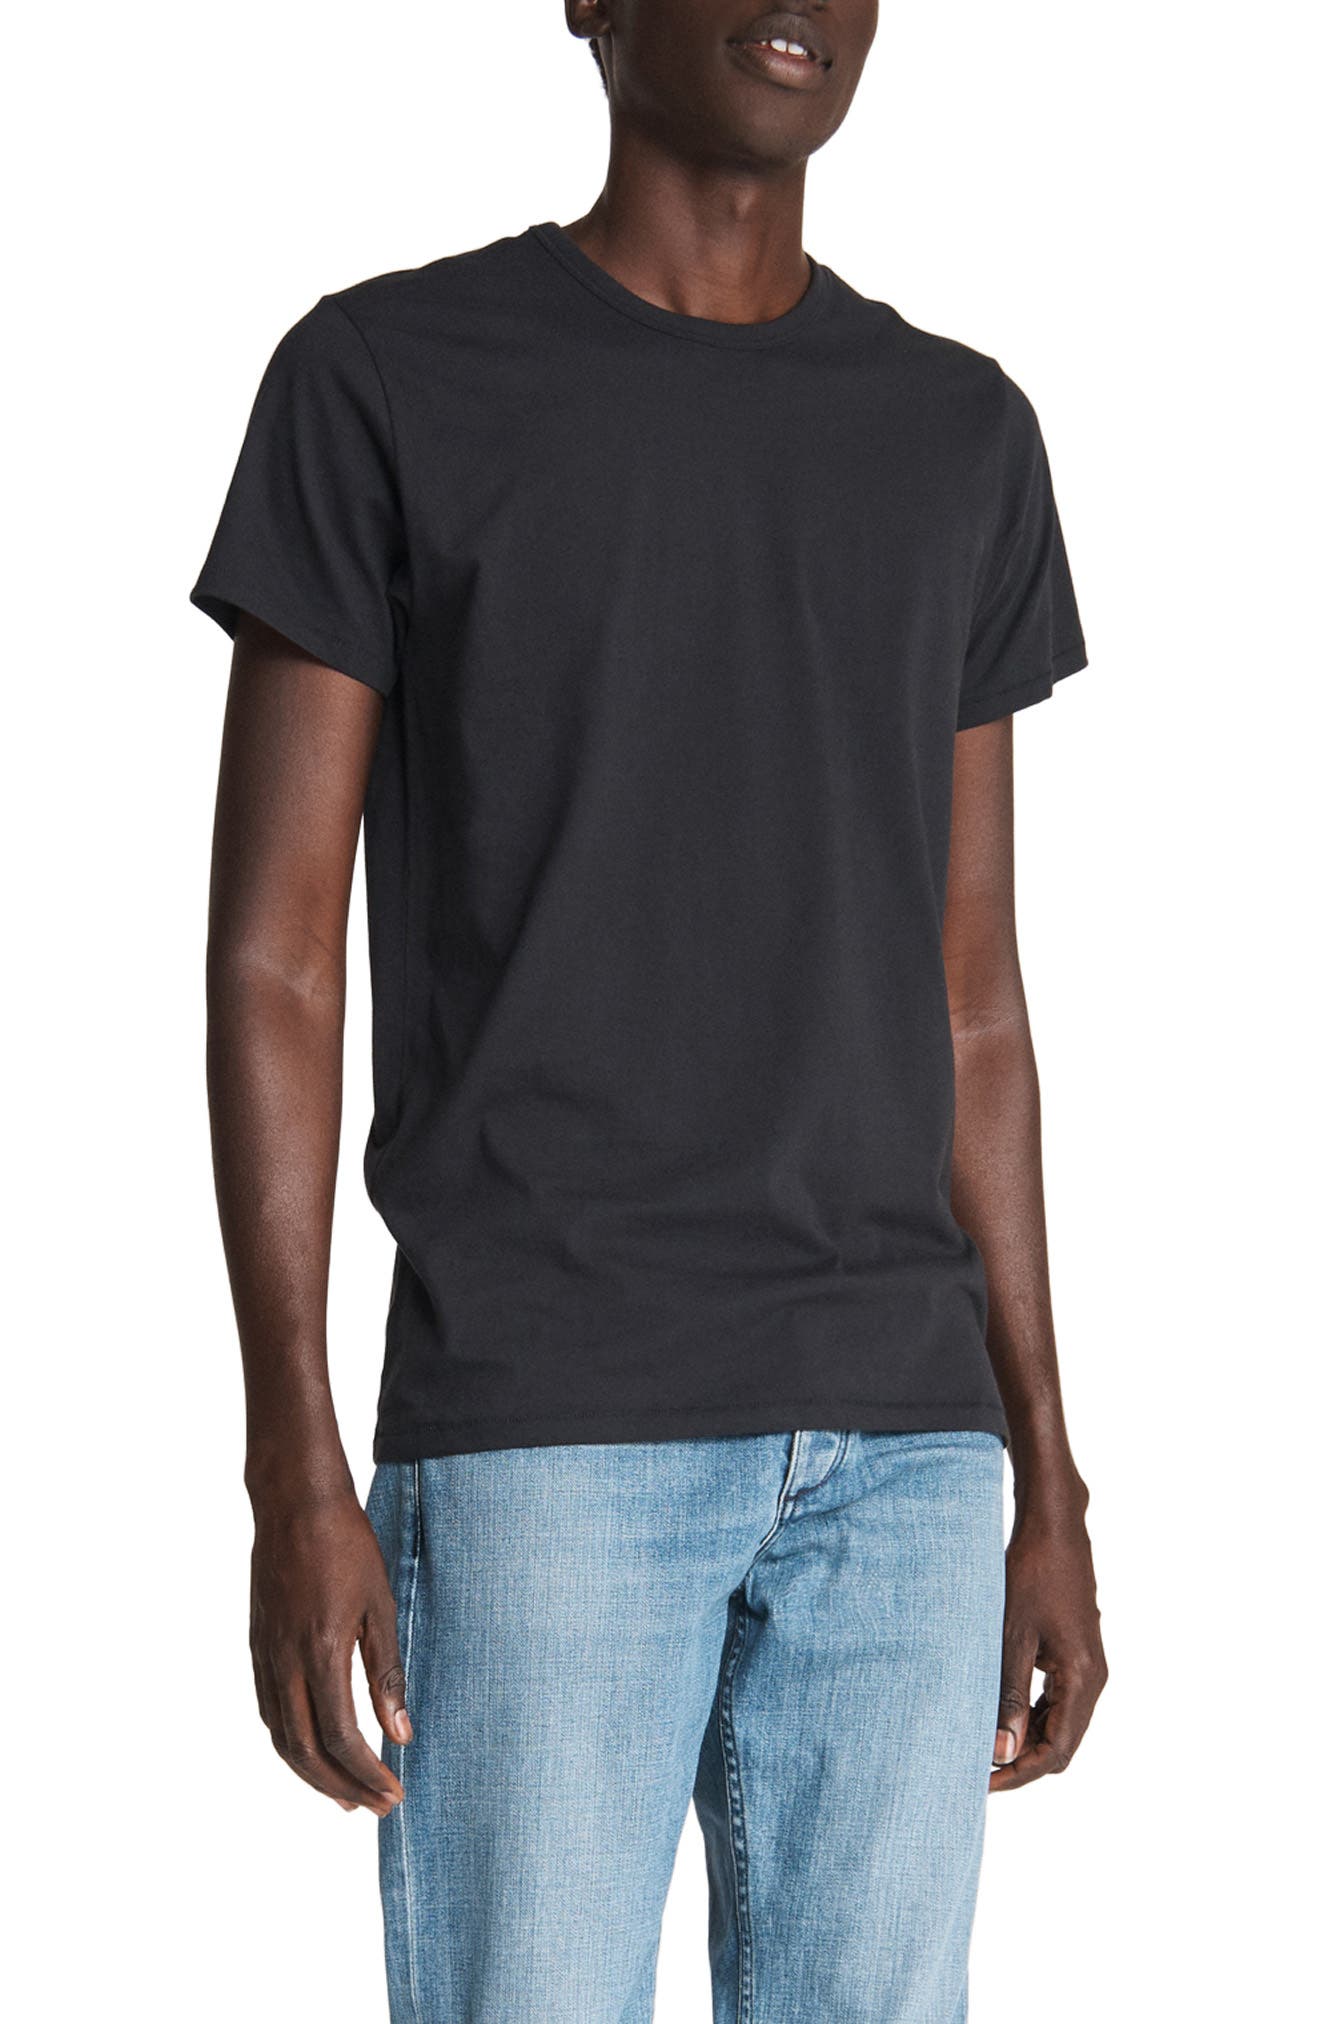 rag & bone Principle Base T-Shirt in Black at Nordstrom, Size Medium